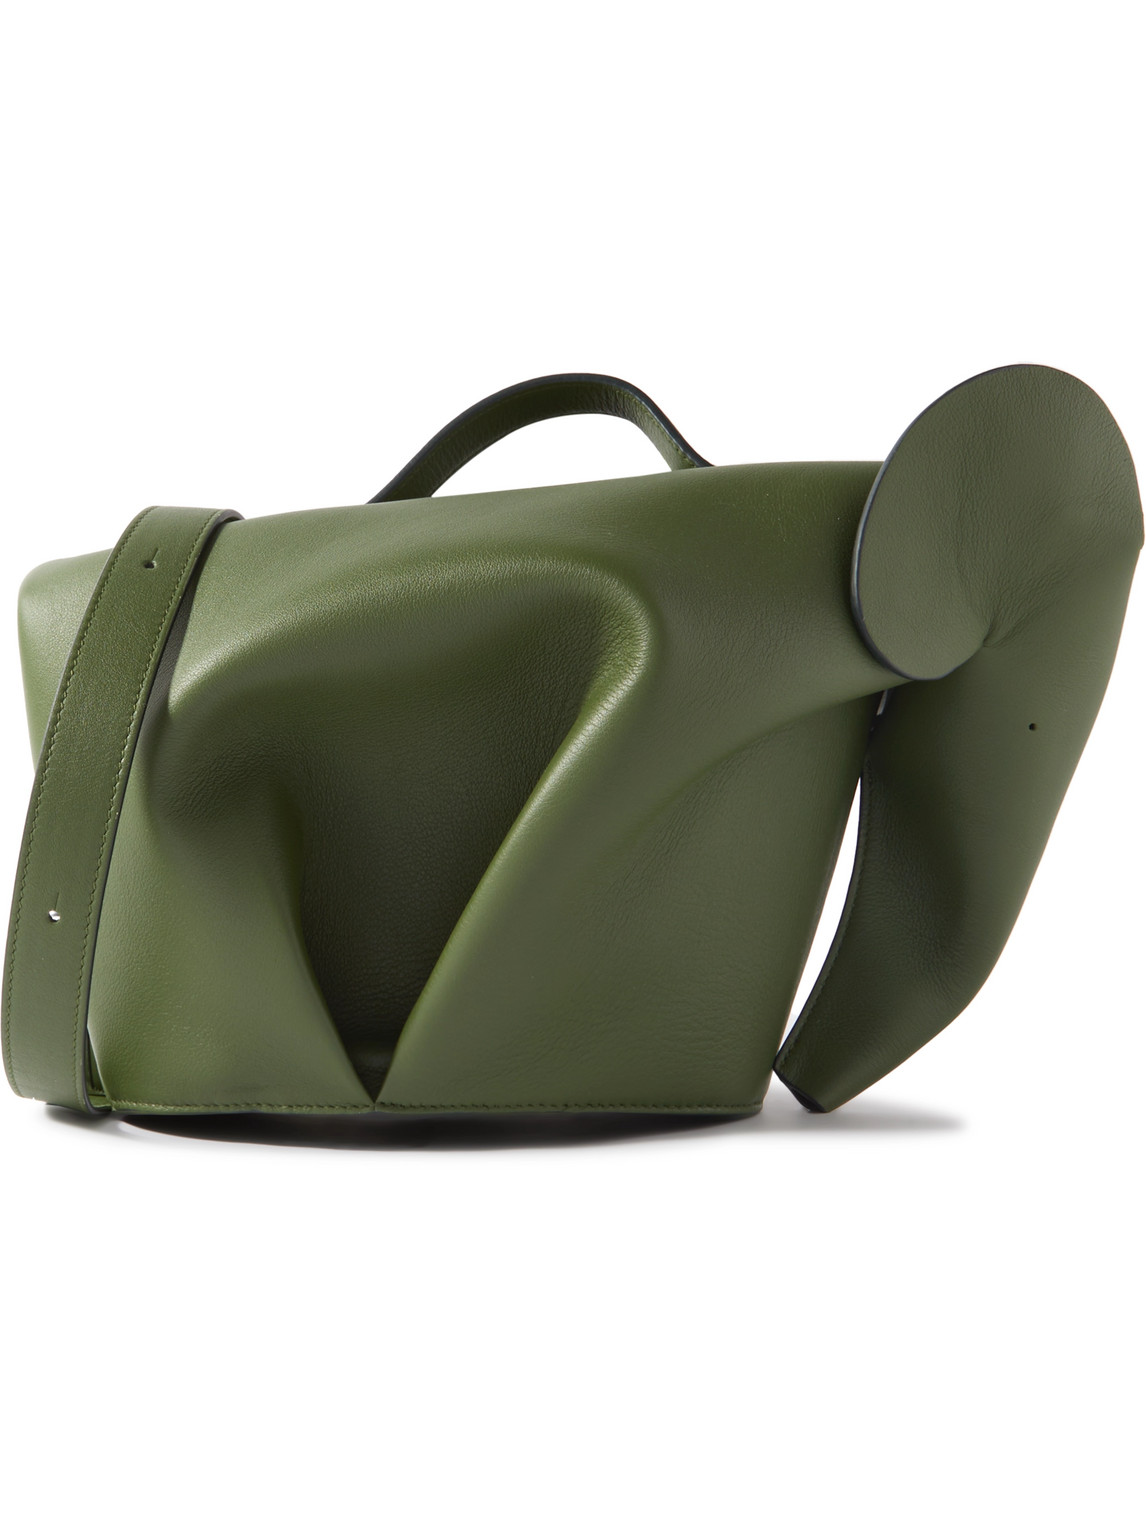 LOEWE - Elephant Leather Messenger Bag - Men - Green | The Hoxton Trend